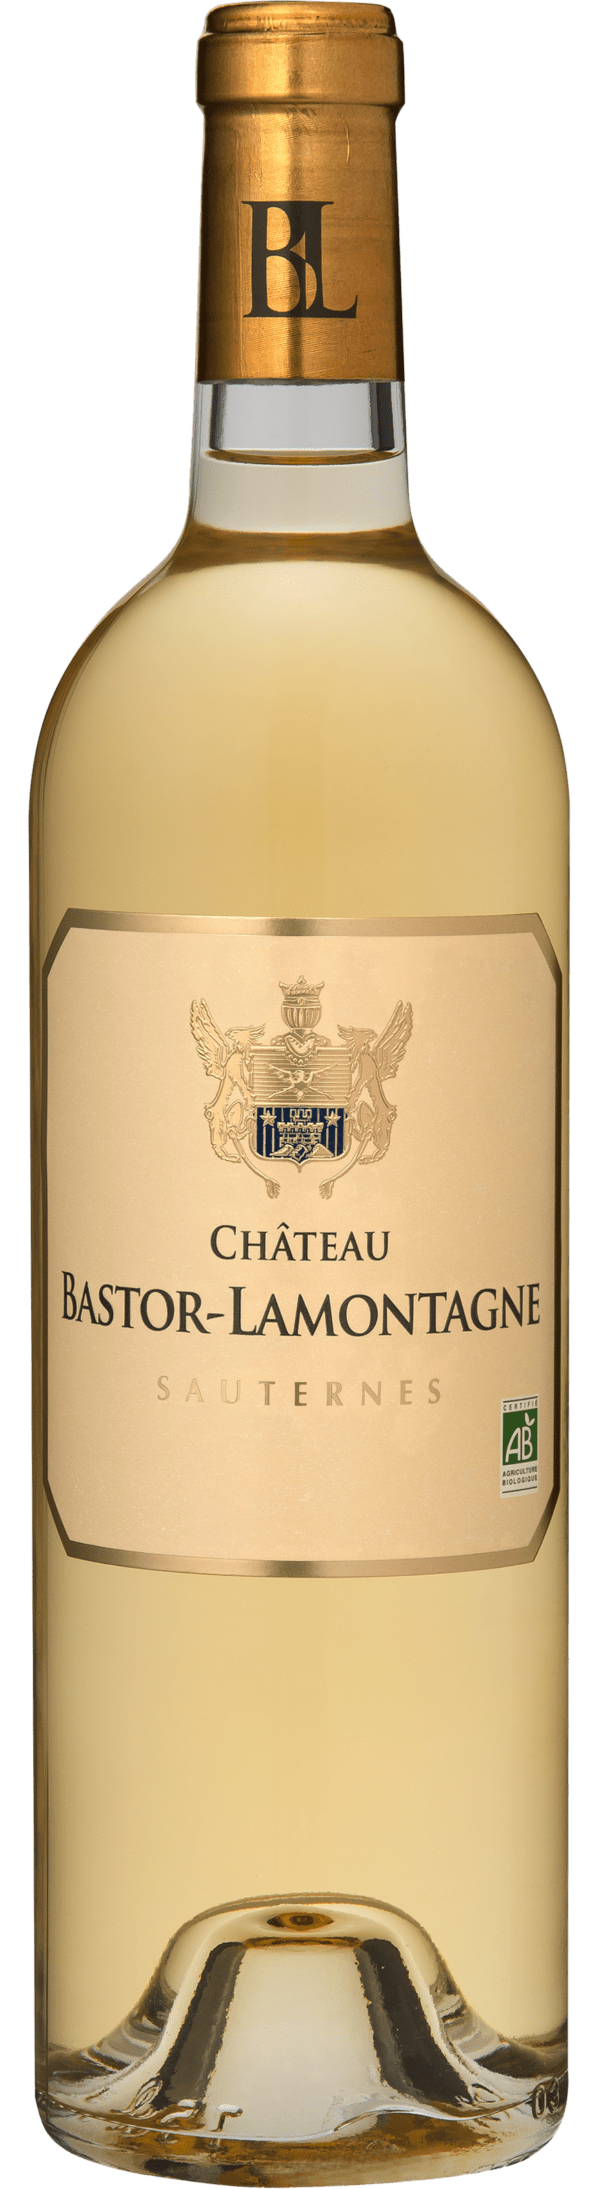 Chateau Bastor-Lamontagne Sautrnes